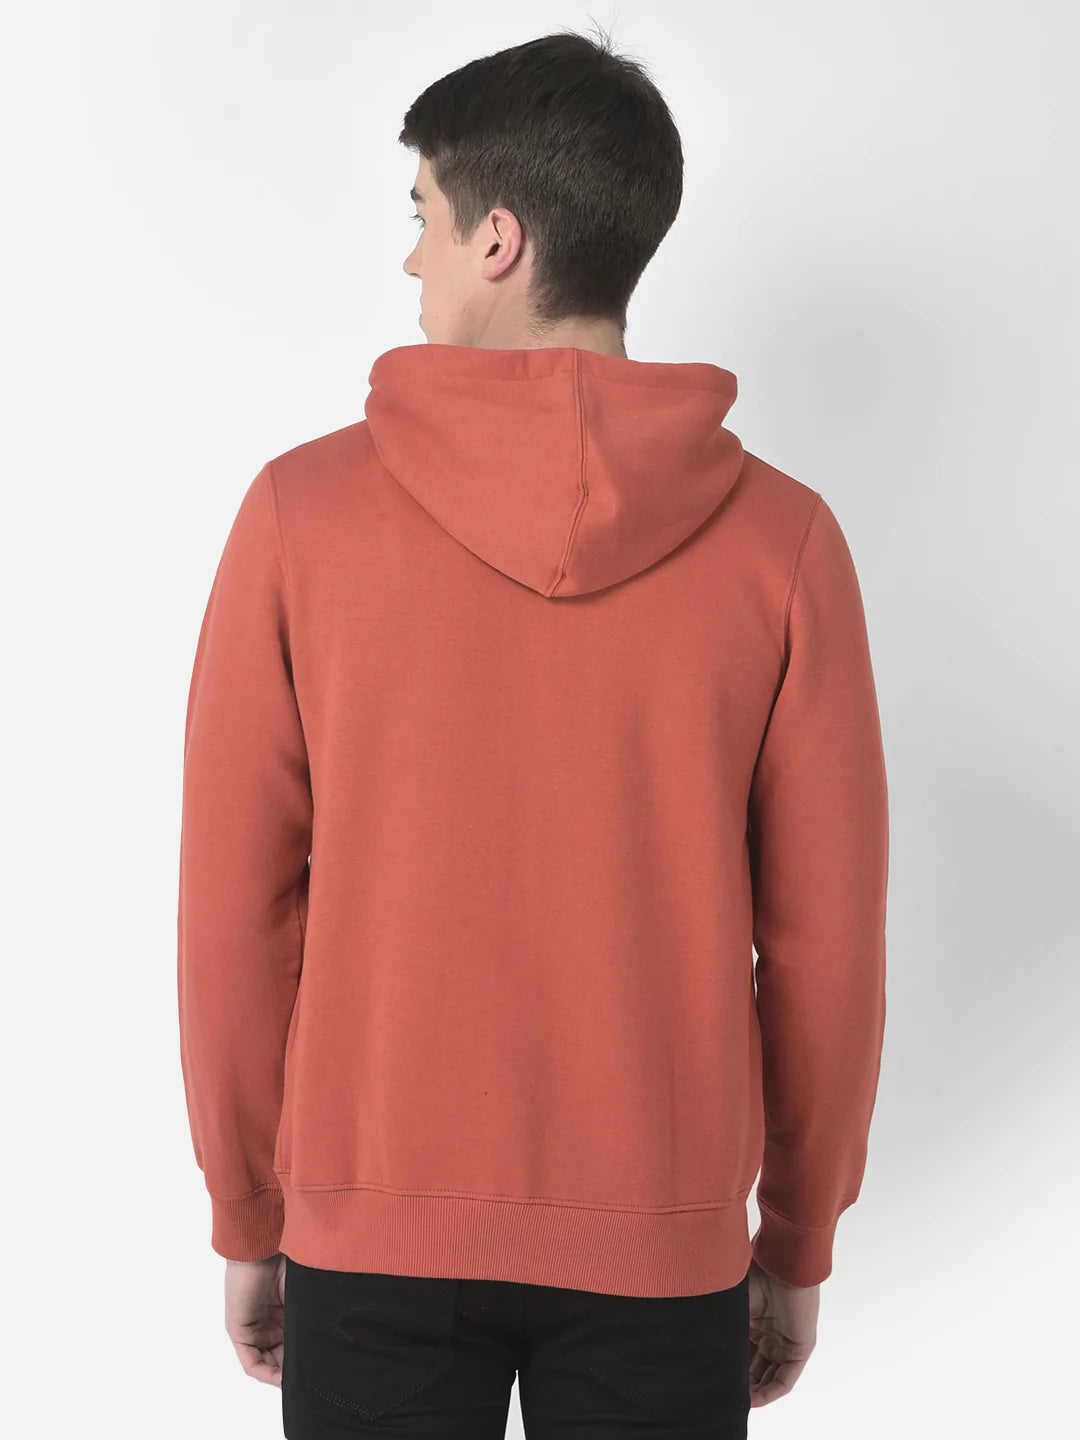  Simple Rust Zipped Sweatshirt 